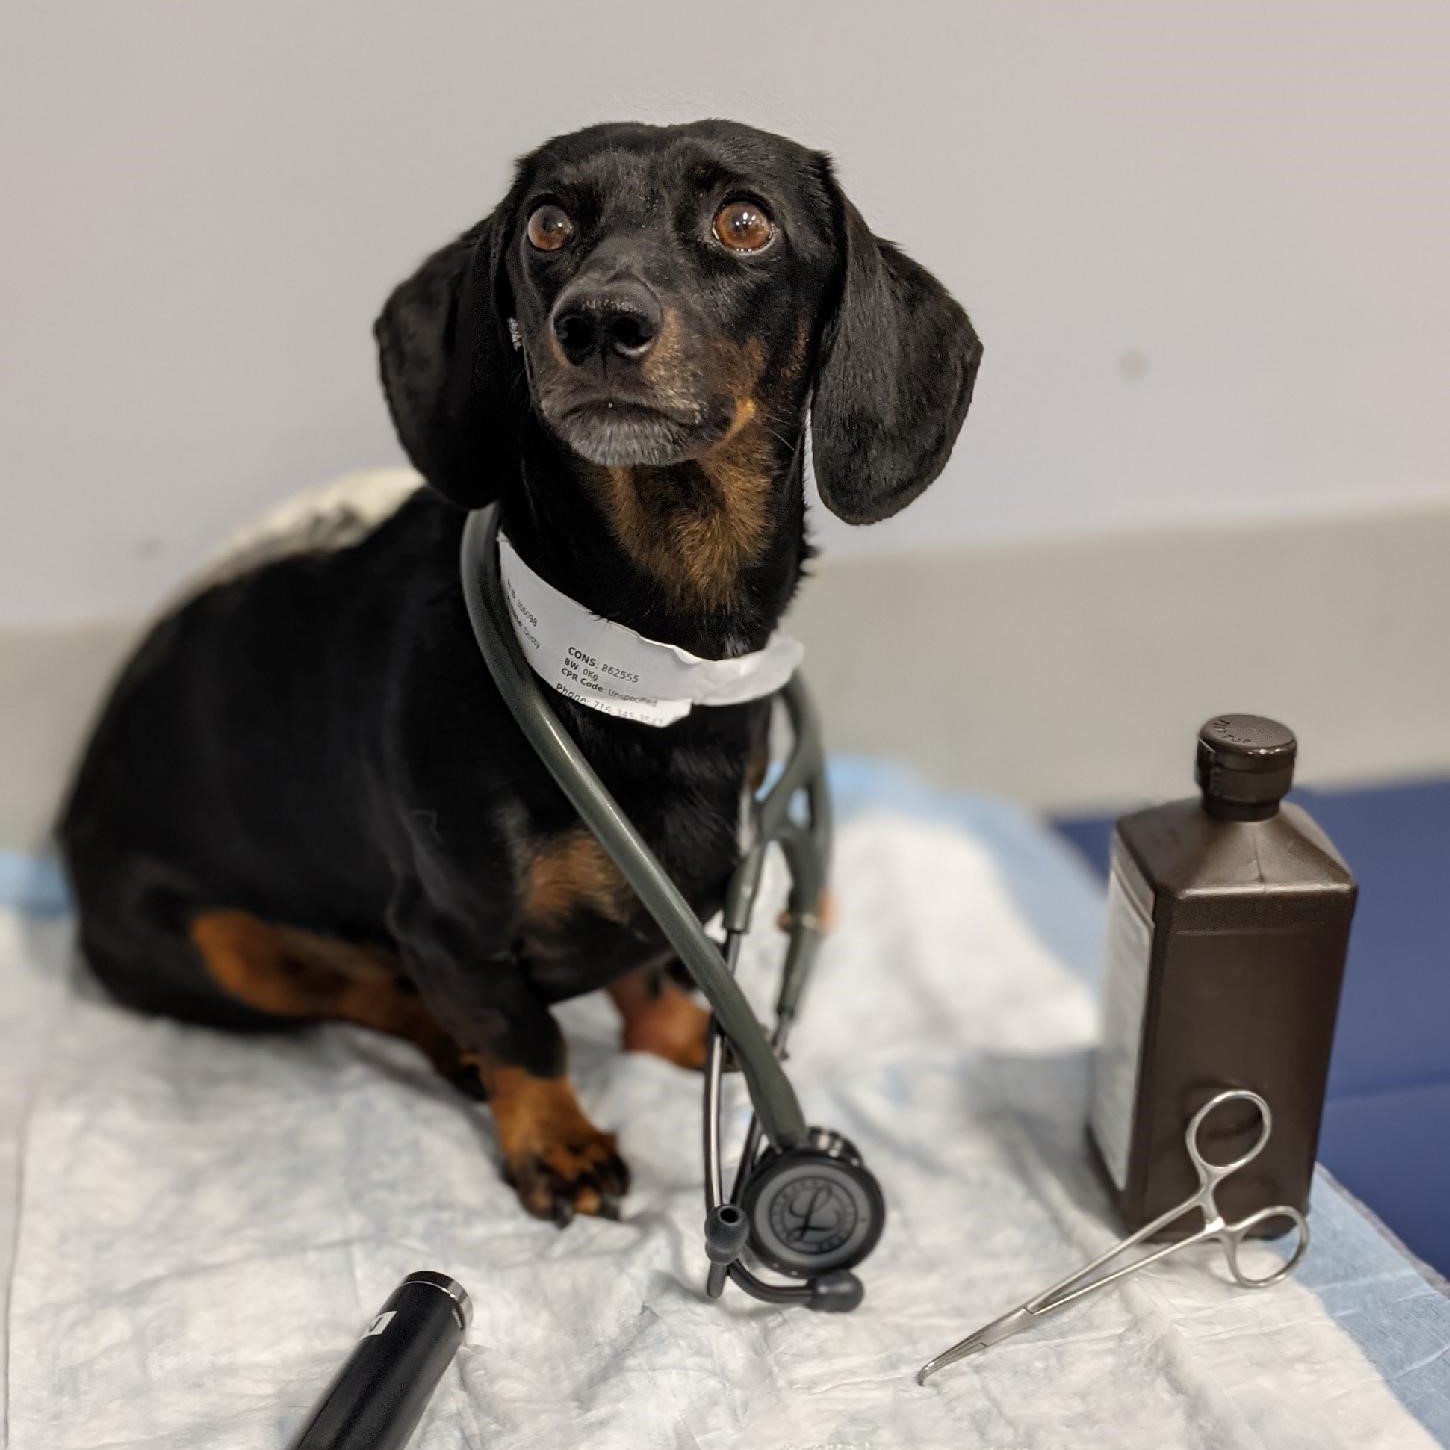 Dusty the dachshund wearing a stethoscope